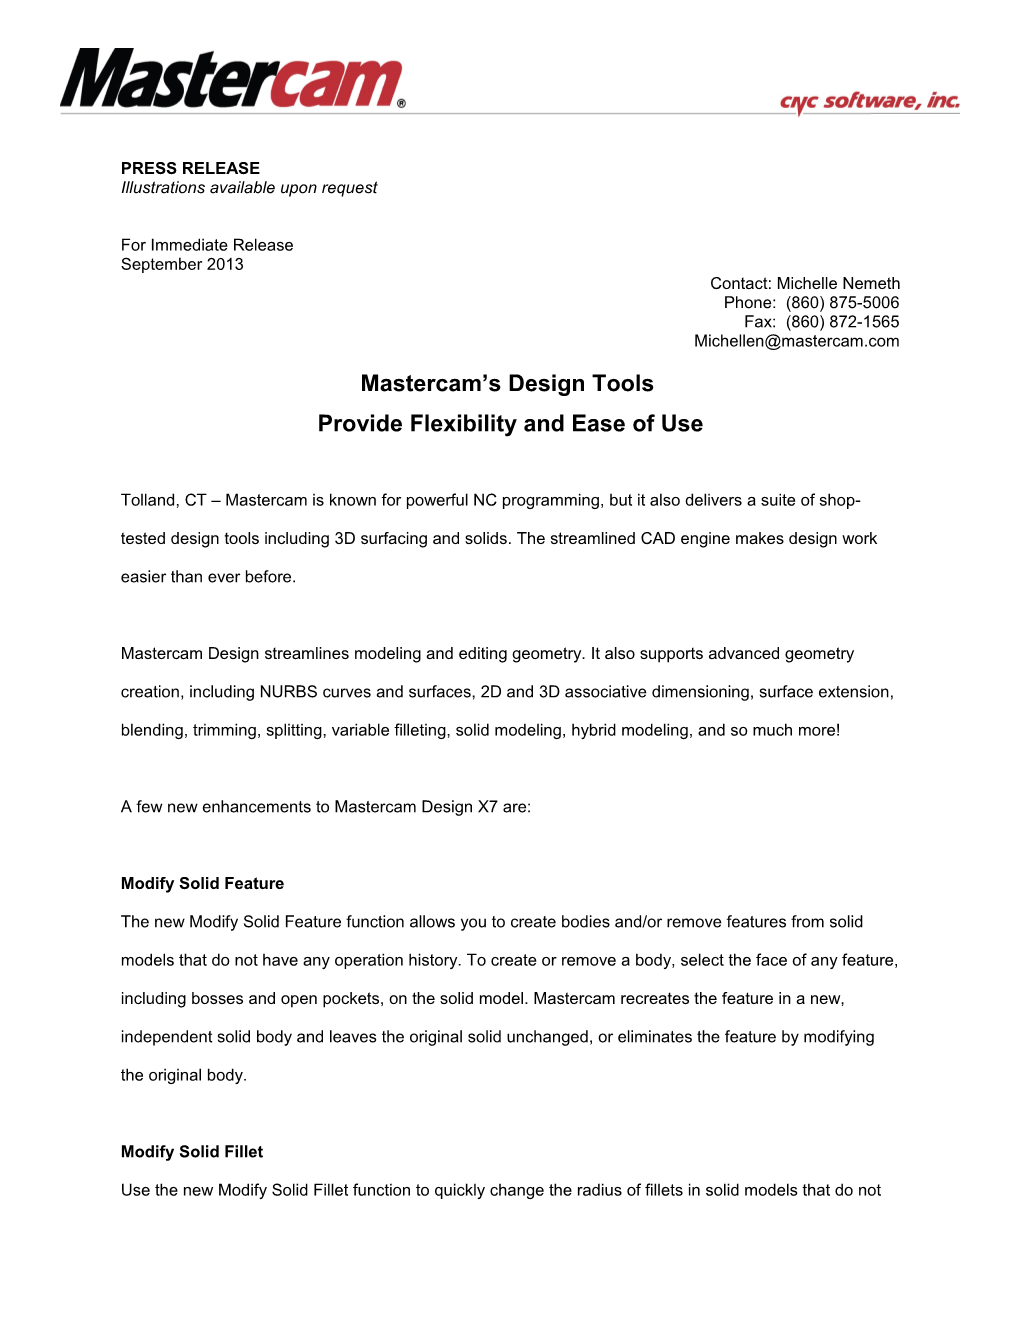 Mastercam X7 Design- Page 1 of 2